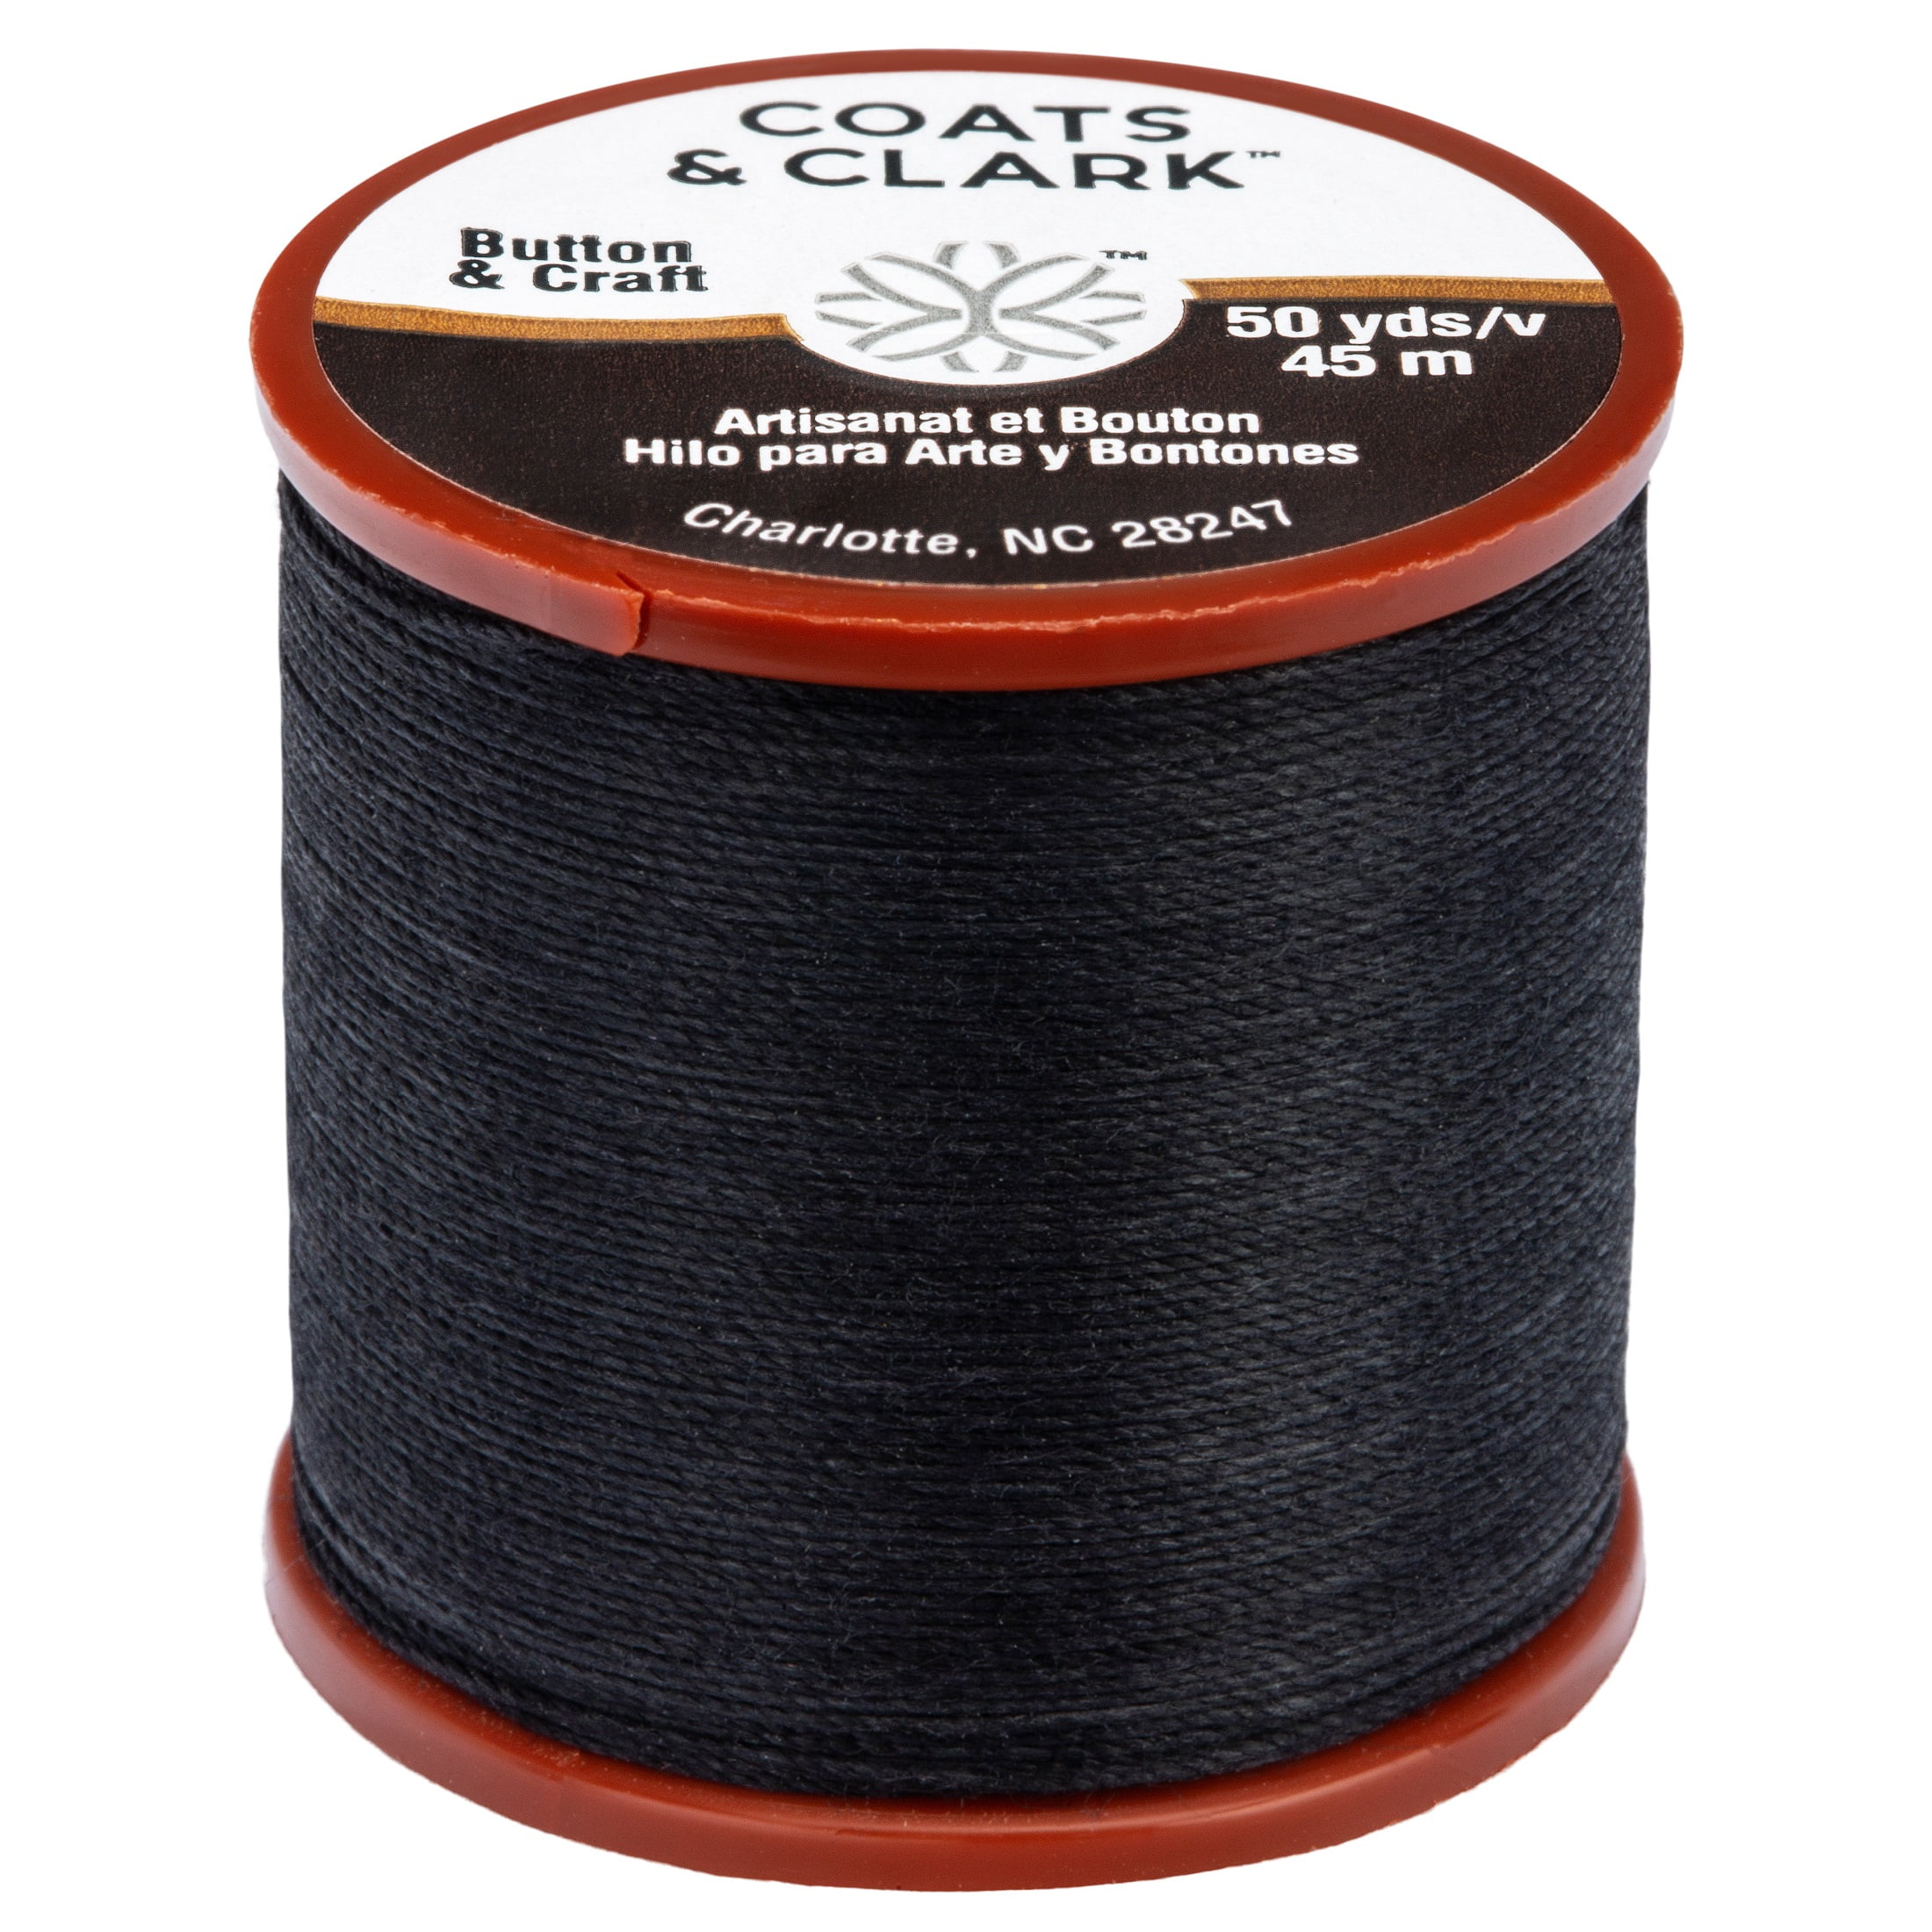 Coats & Clark Machine Embroidery Thread 1100 yds, Yale Blue